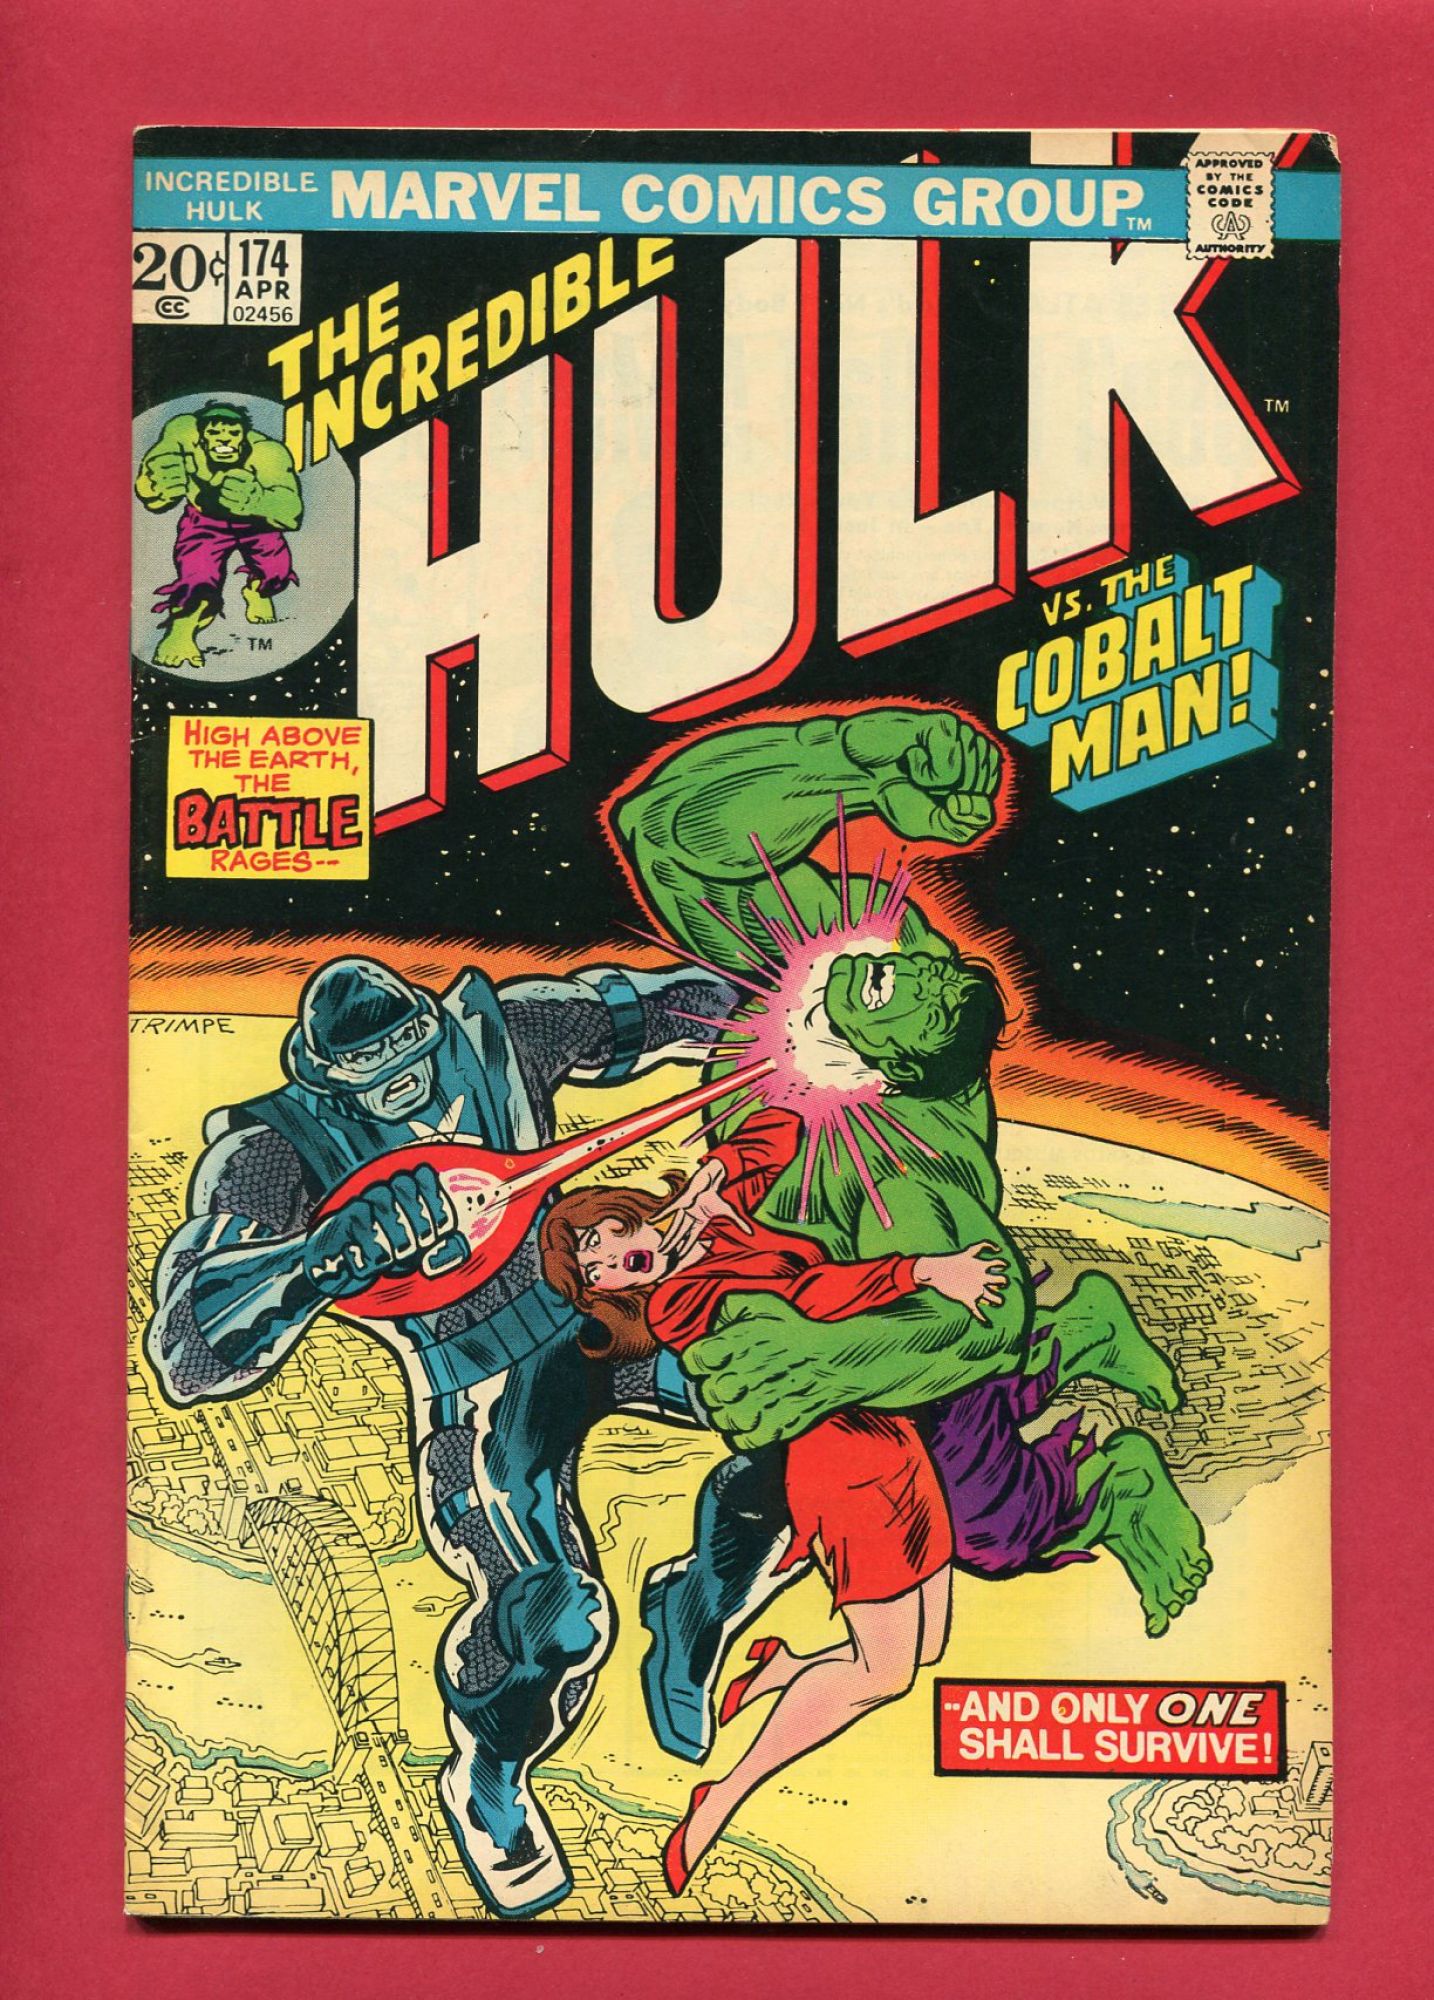 Incredible Hulk #174, Apr 1974, 8.0 VF